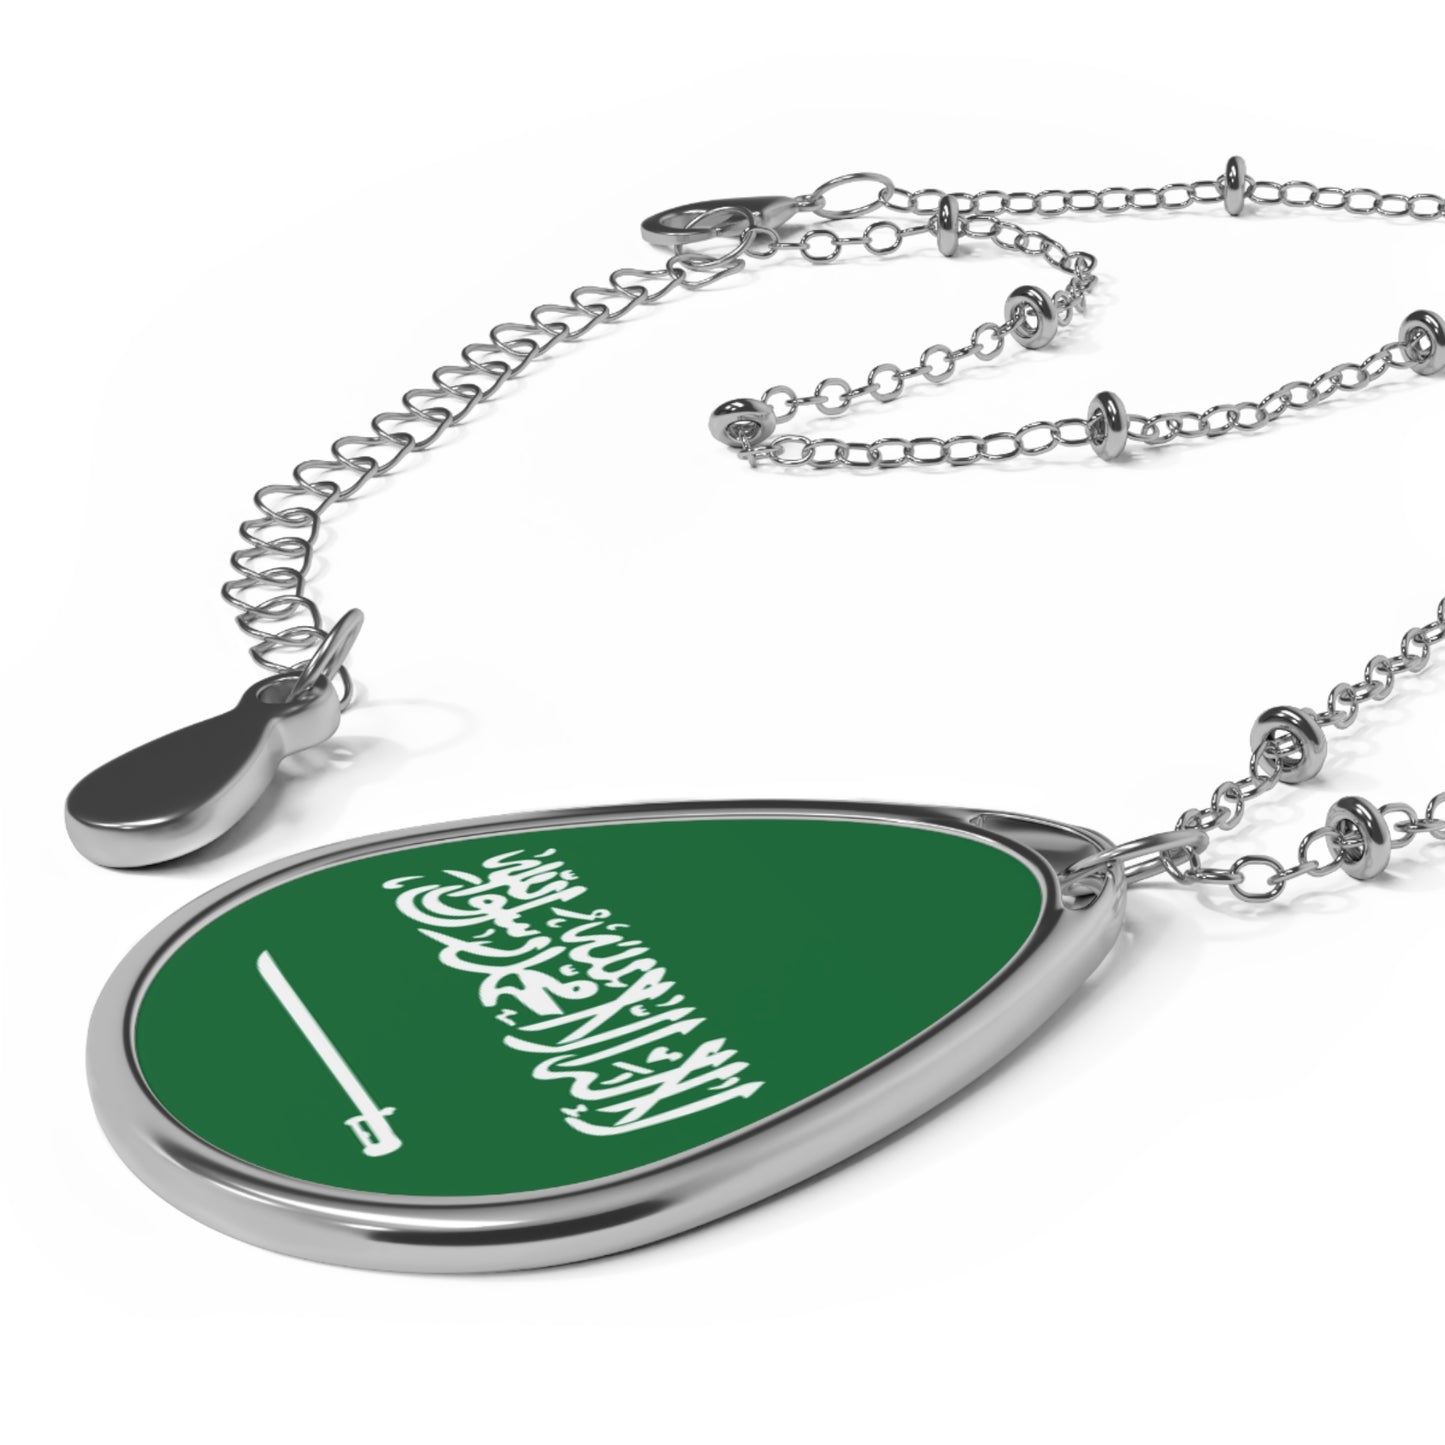 Arabic Necklace Design